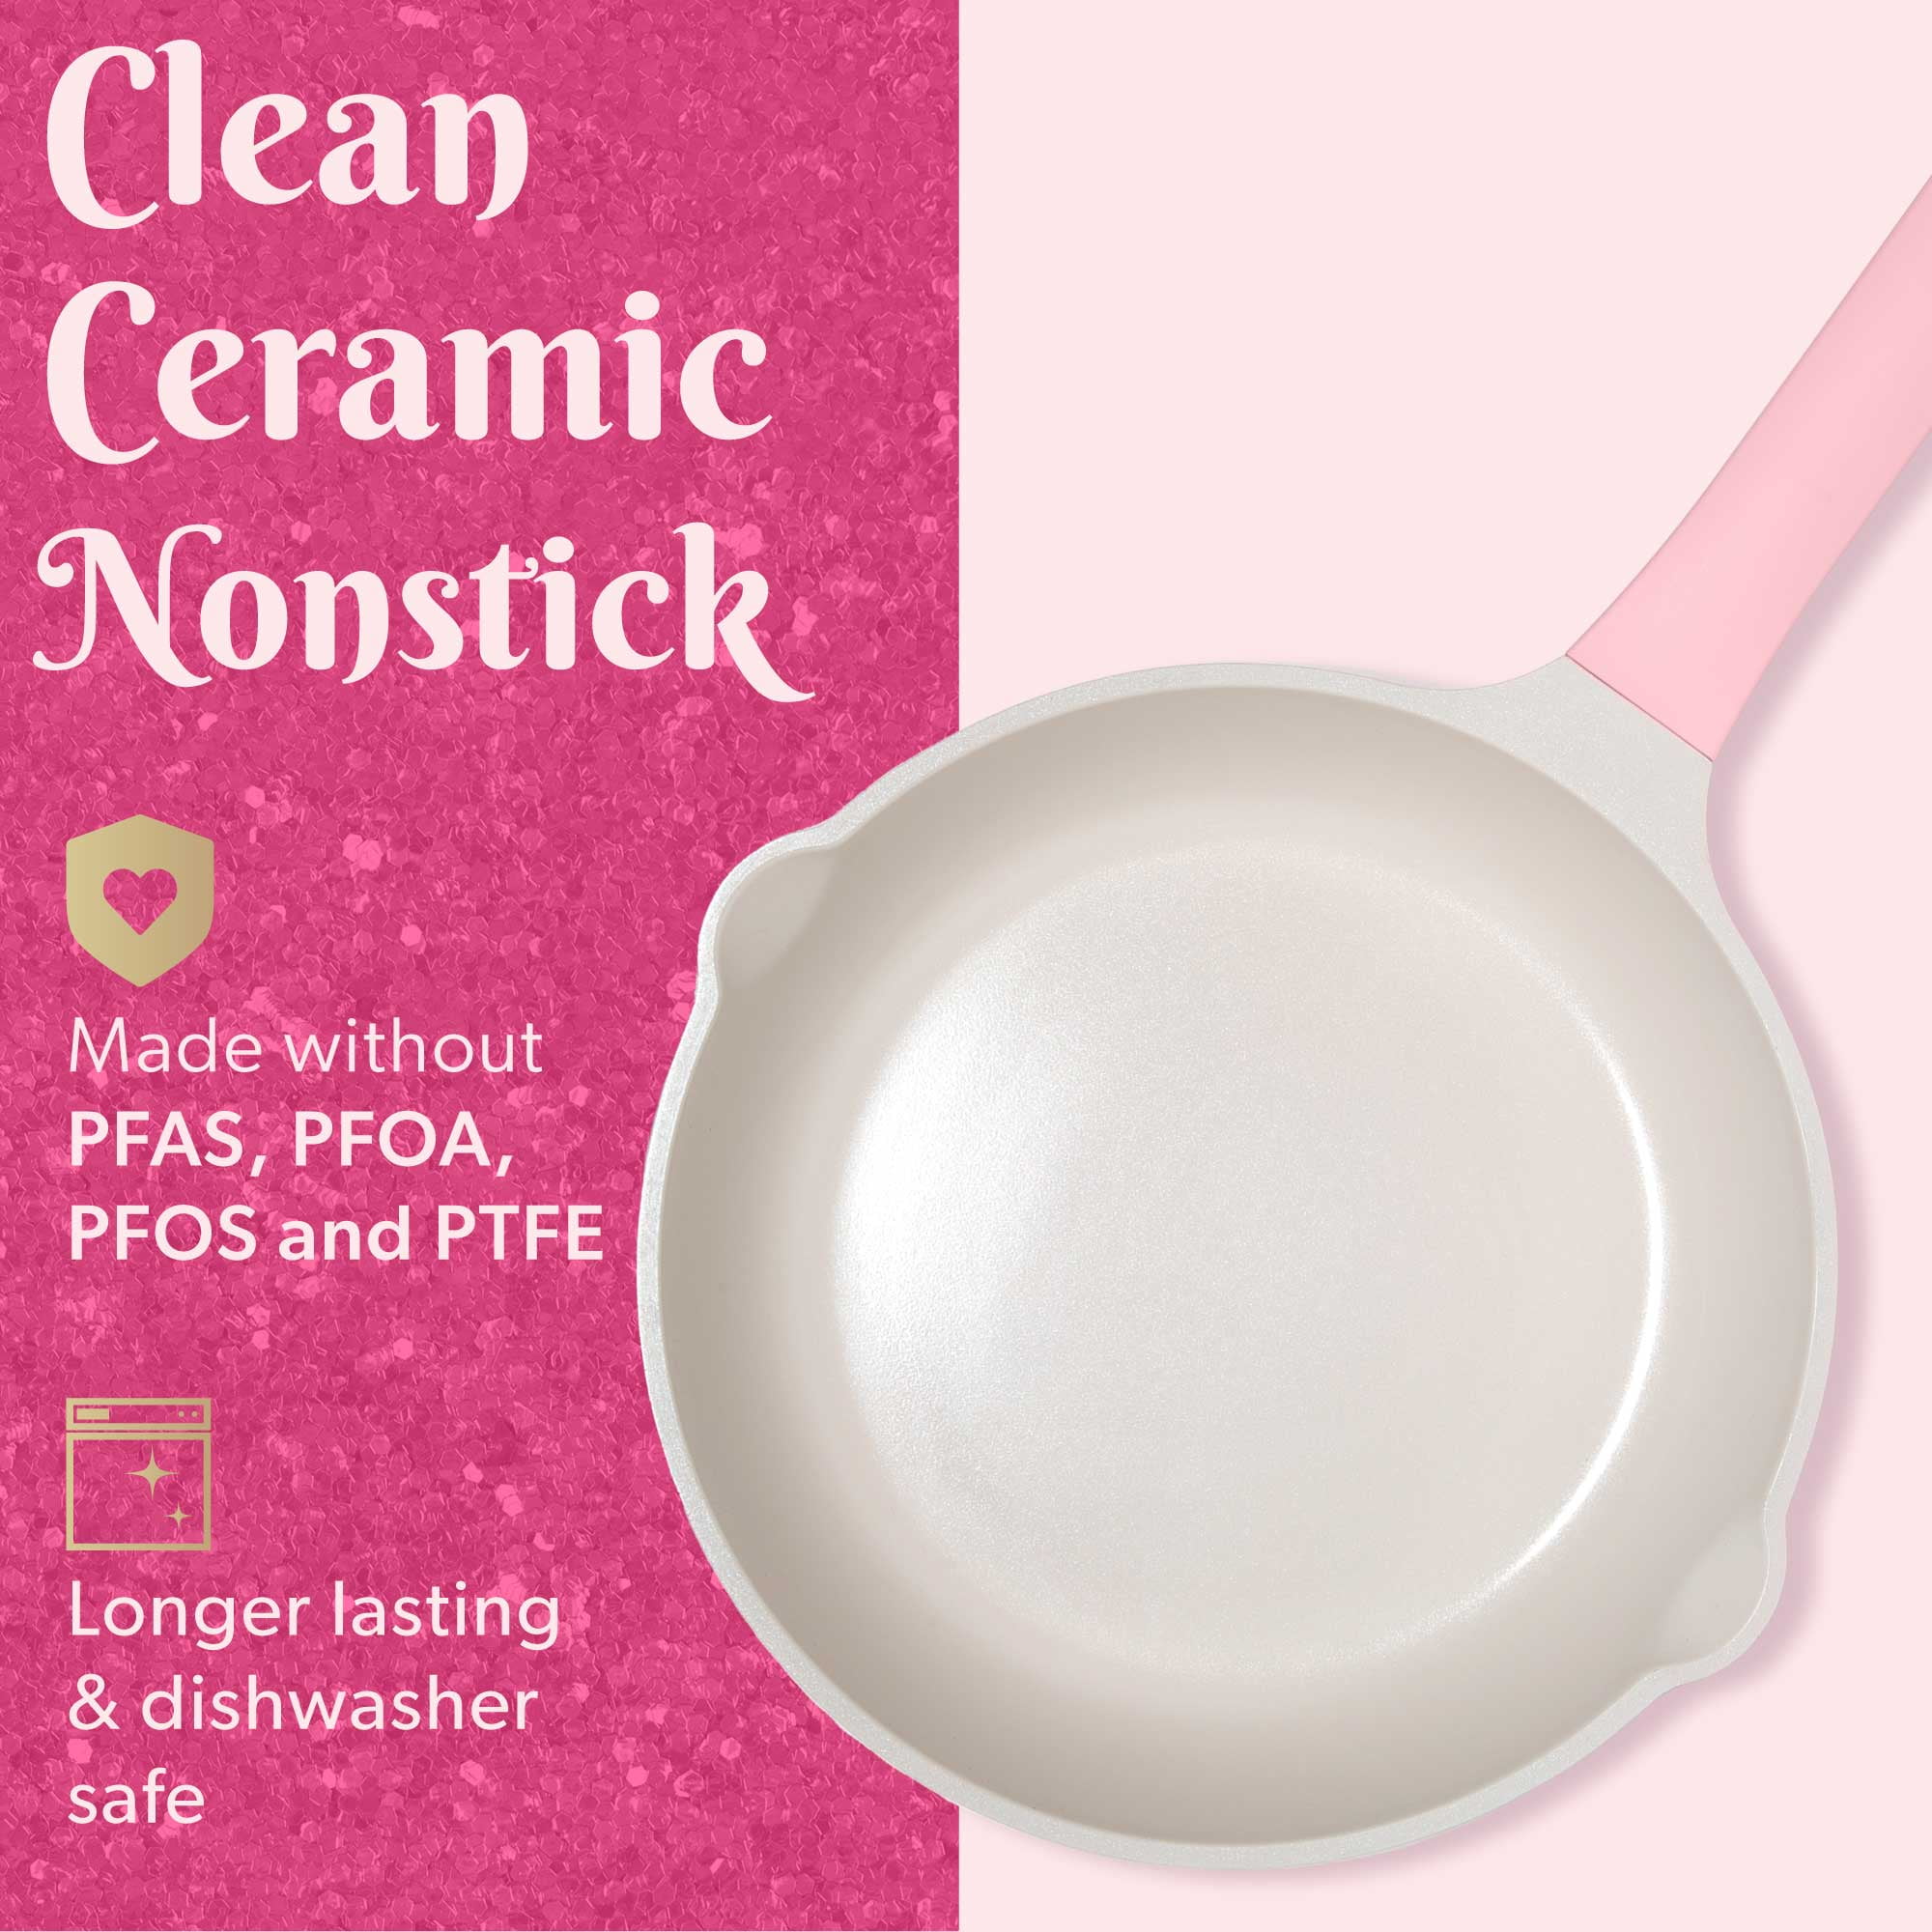 Paris Hilton Breakfast Ceramic Nonstick Cookware Set, Includes